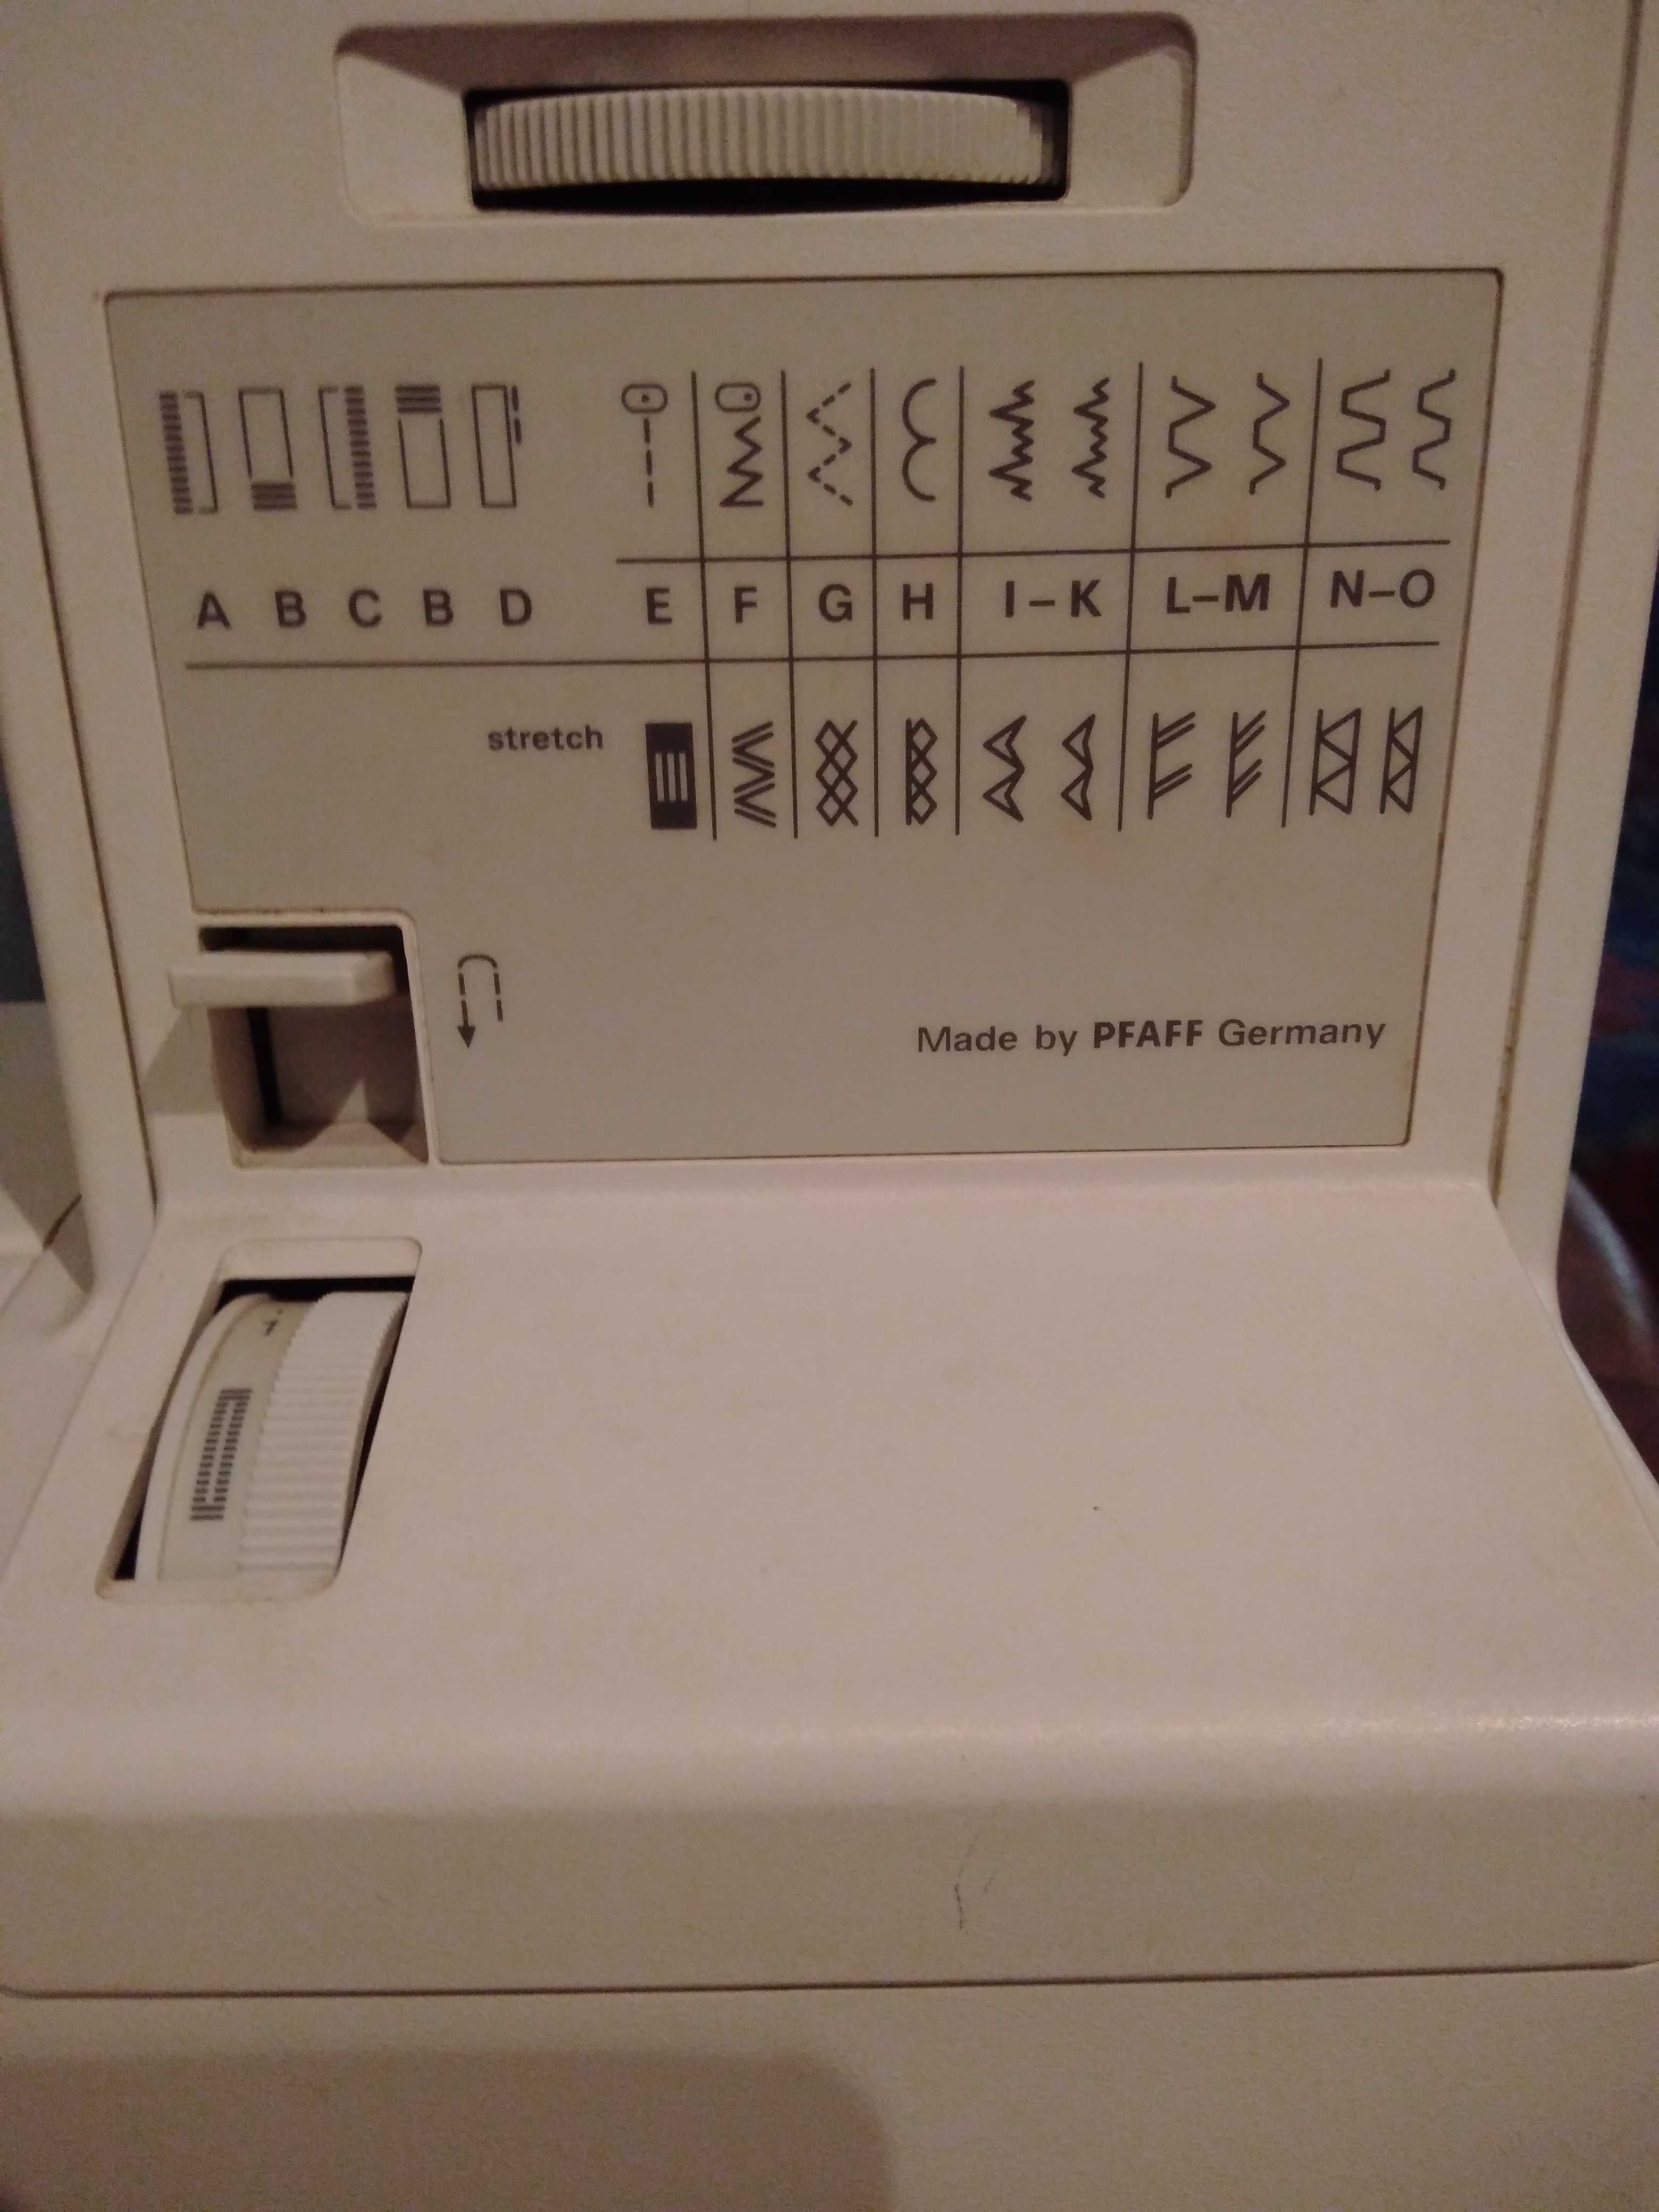 Eлектрична швейна машинка Pfaff,оригінал Німеччина.